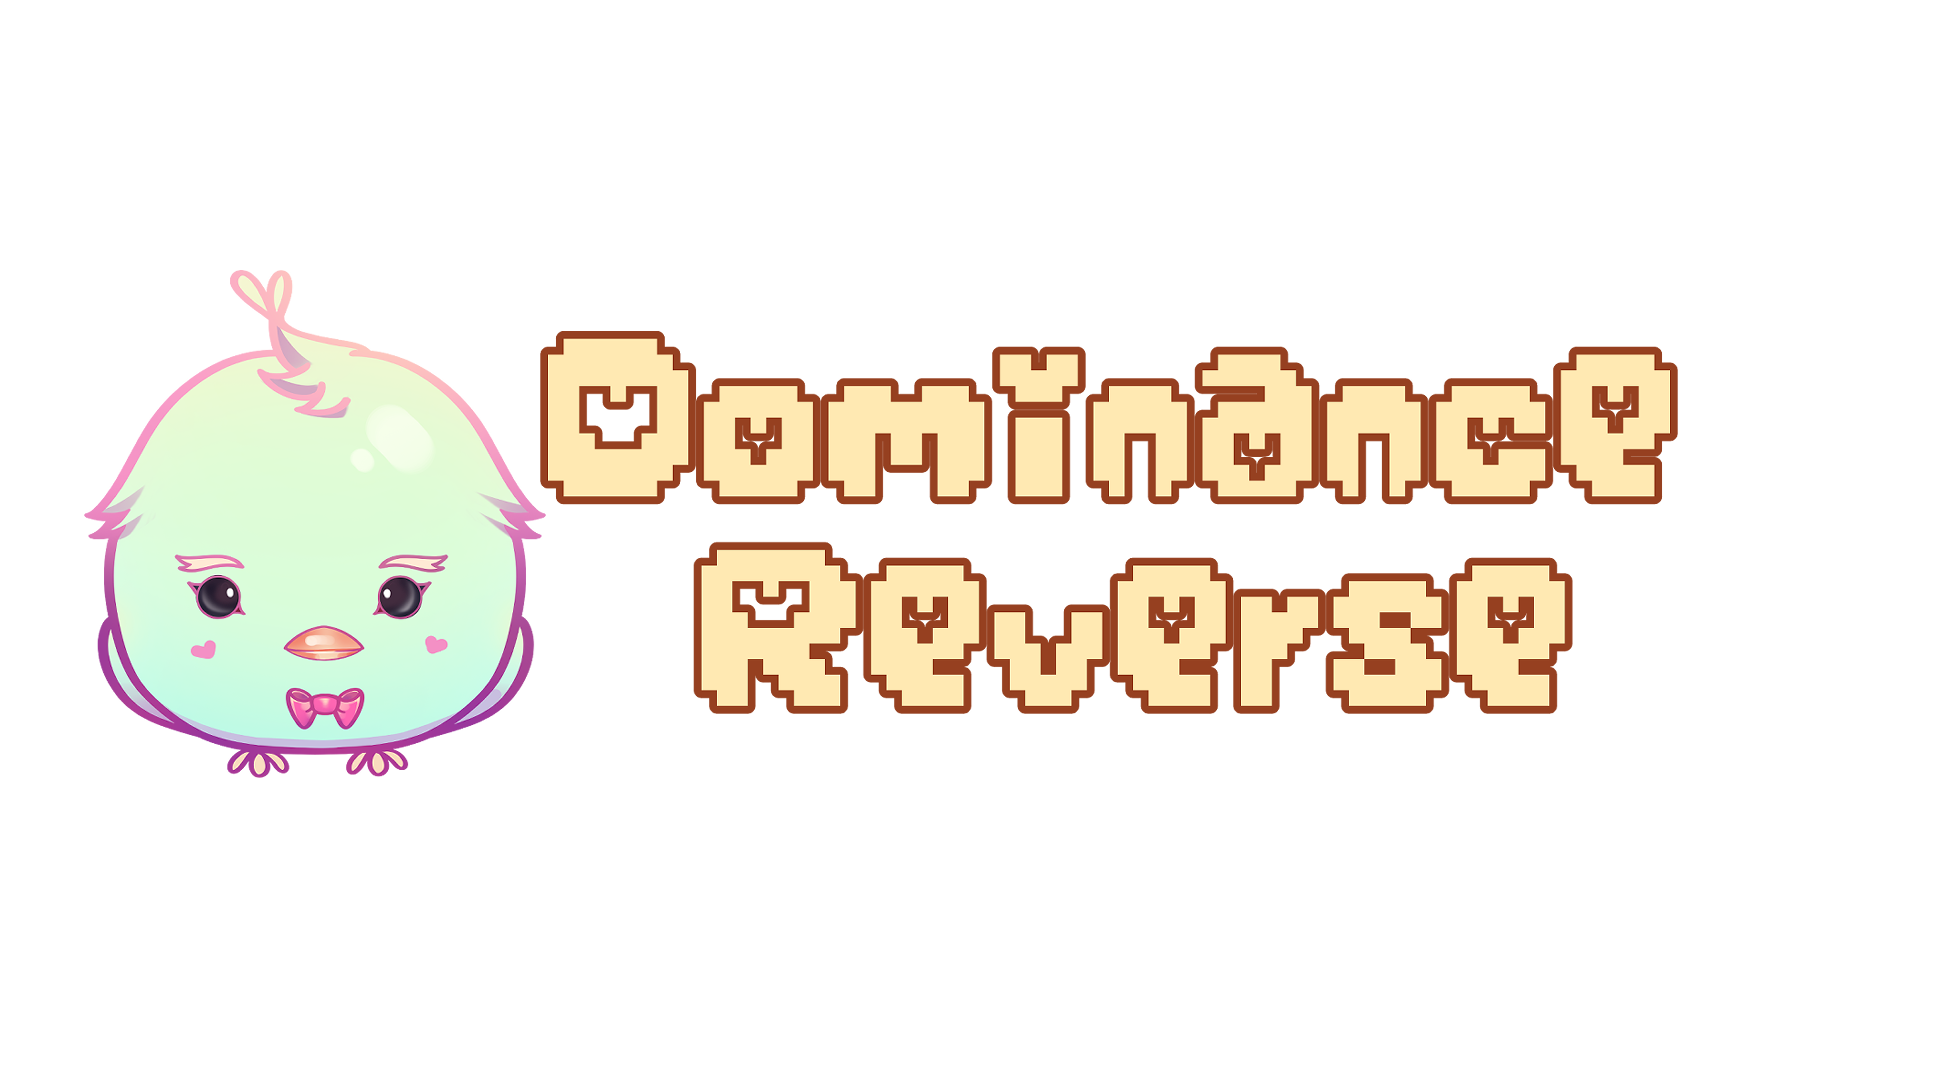 Dominance REverse (DEMO)